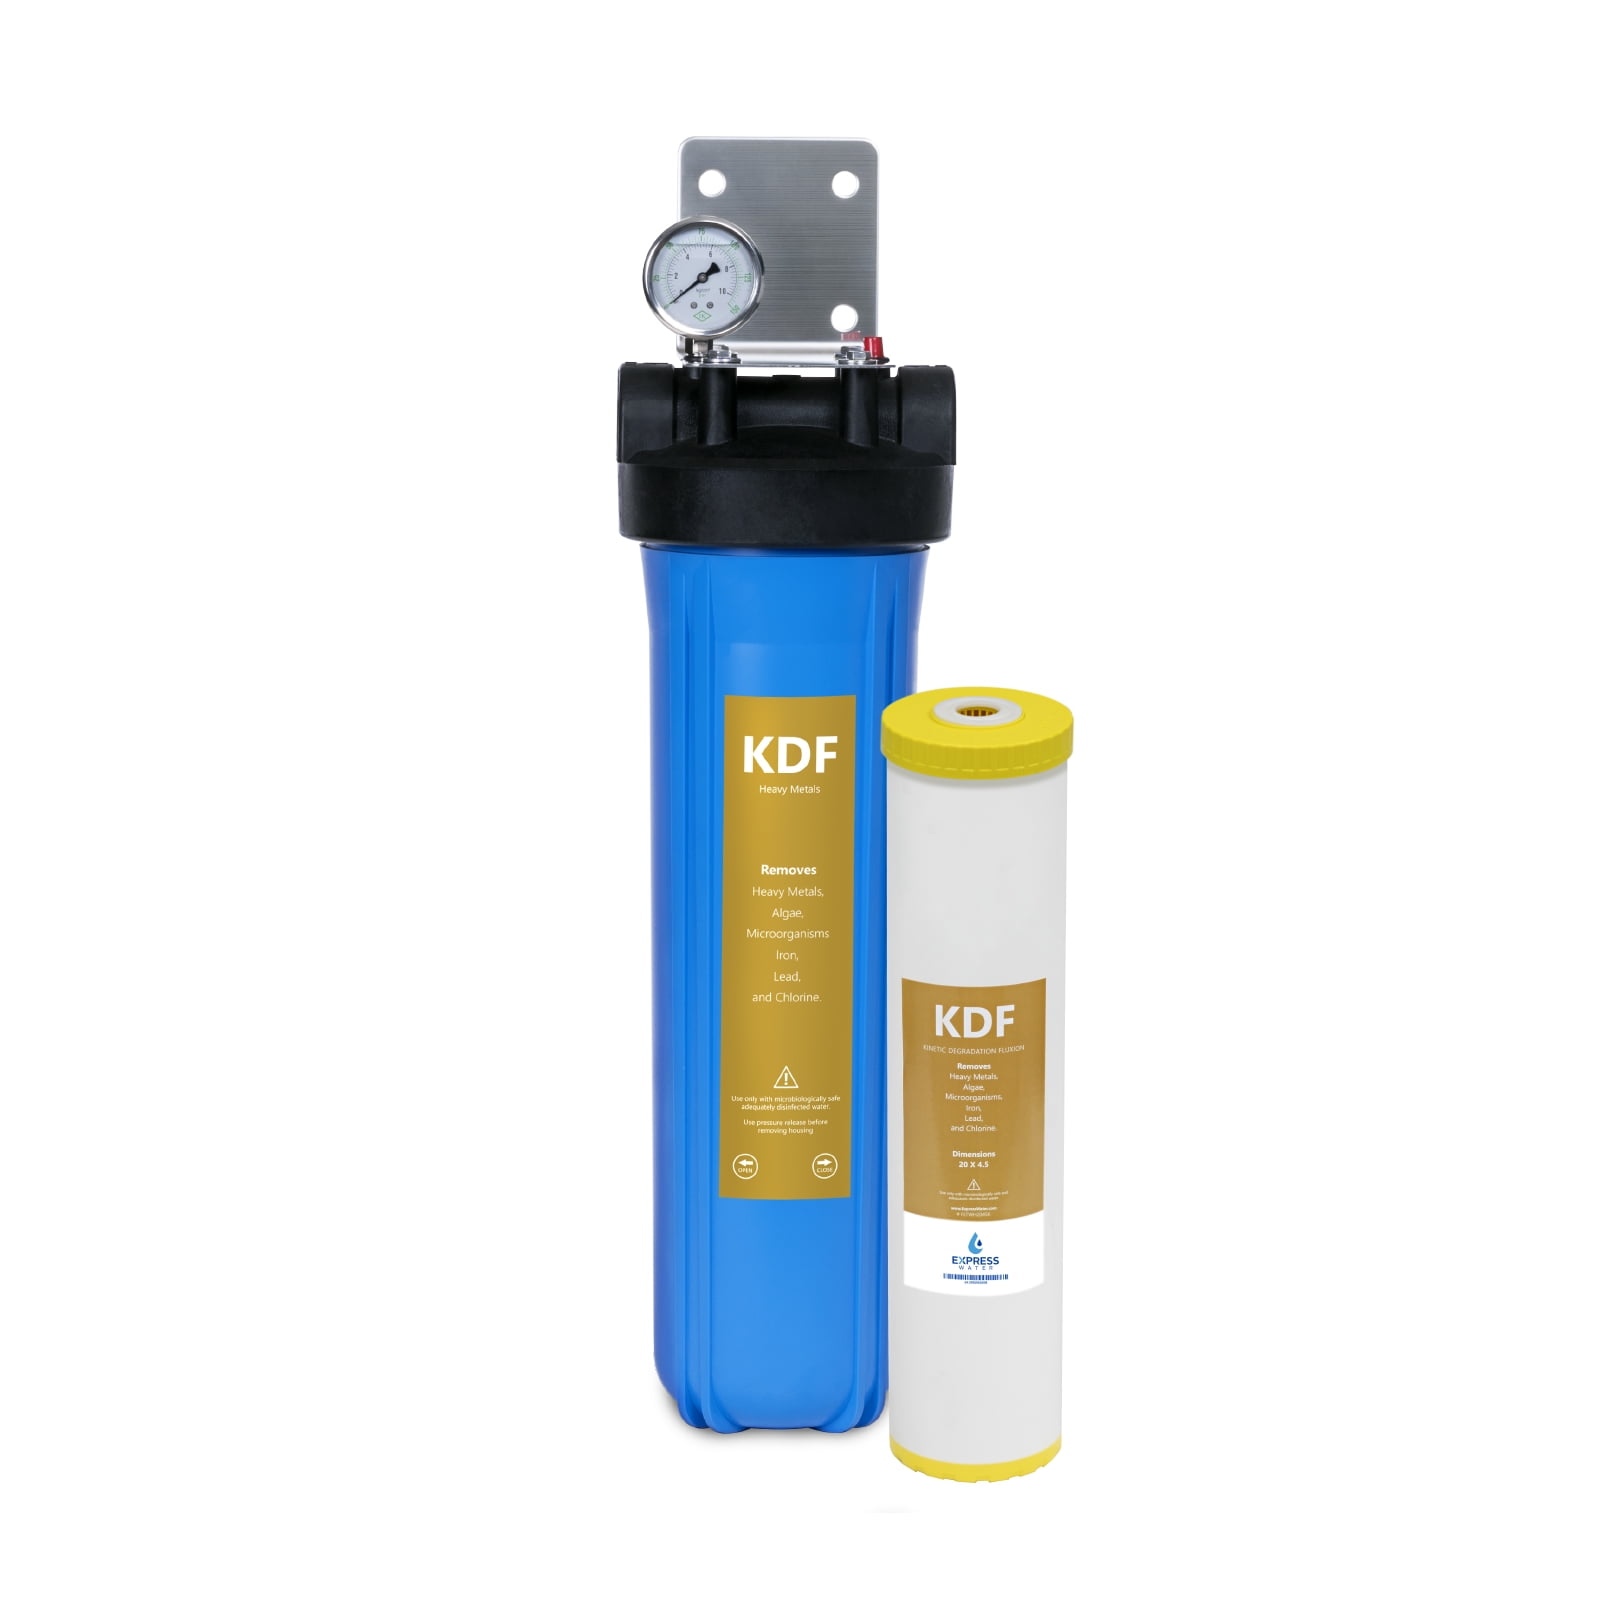 Portable/Counter top CARBON/KDF Chlorine/Heavy Metals/VOC's Filtration System. 